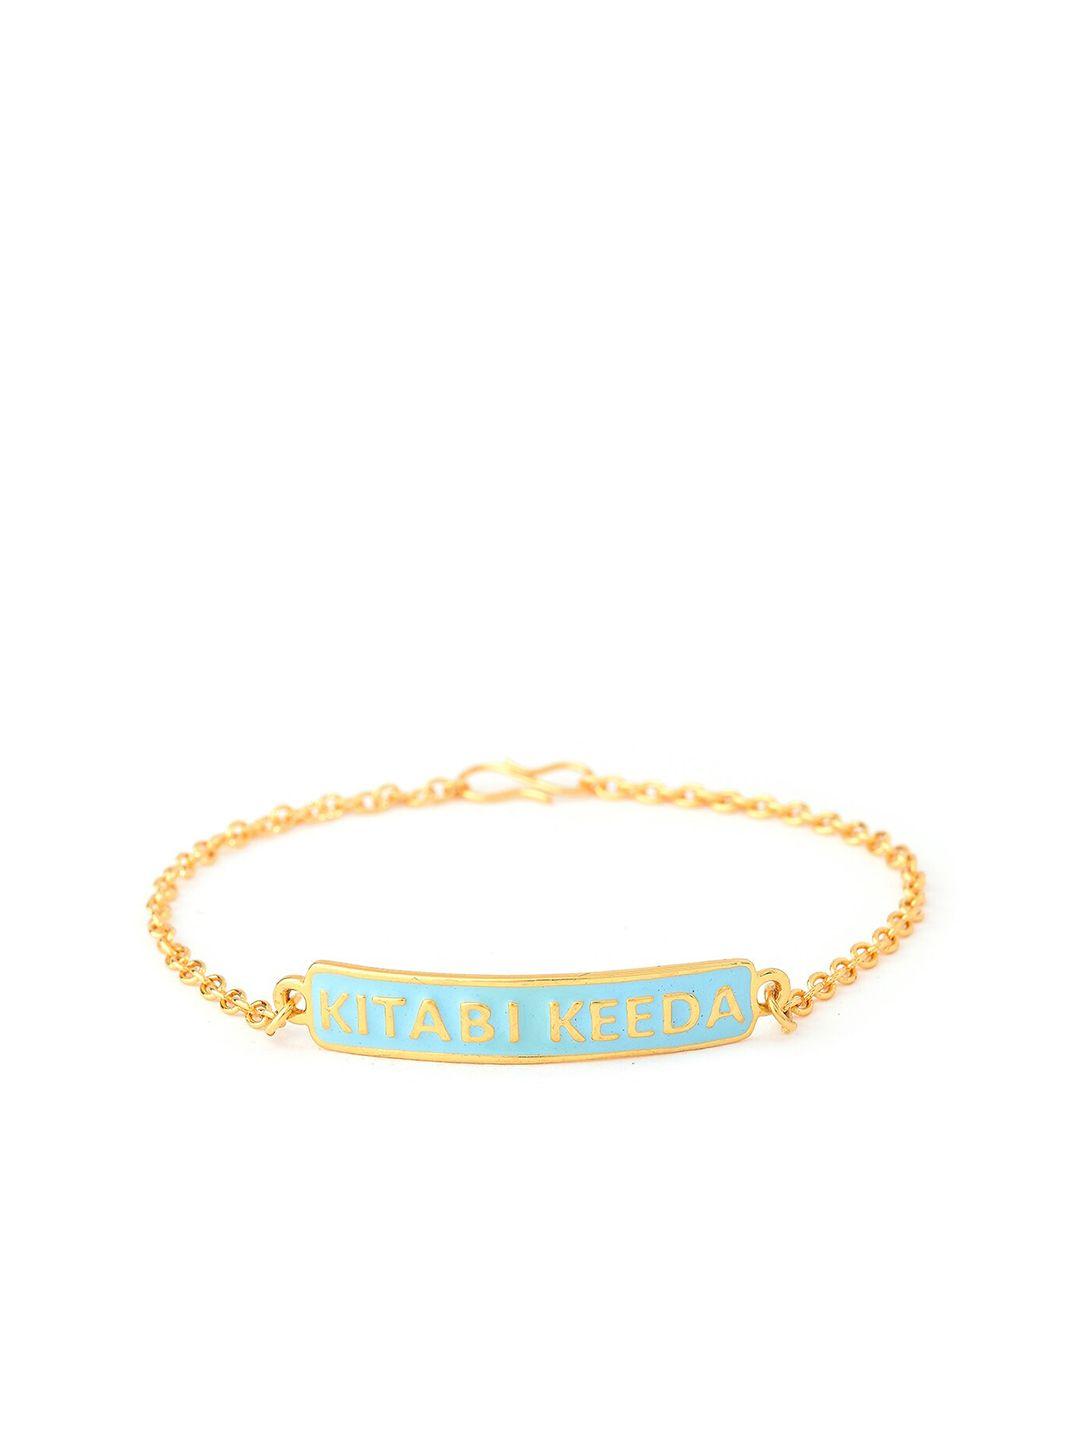 tistabene women gold-plated & blue kitabi keeda bracelet